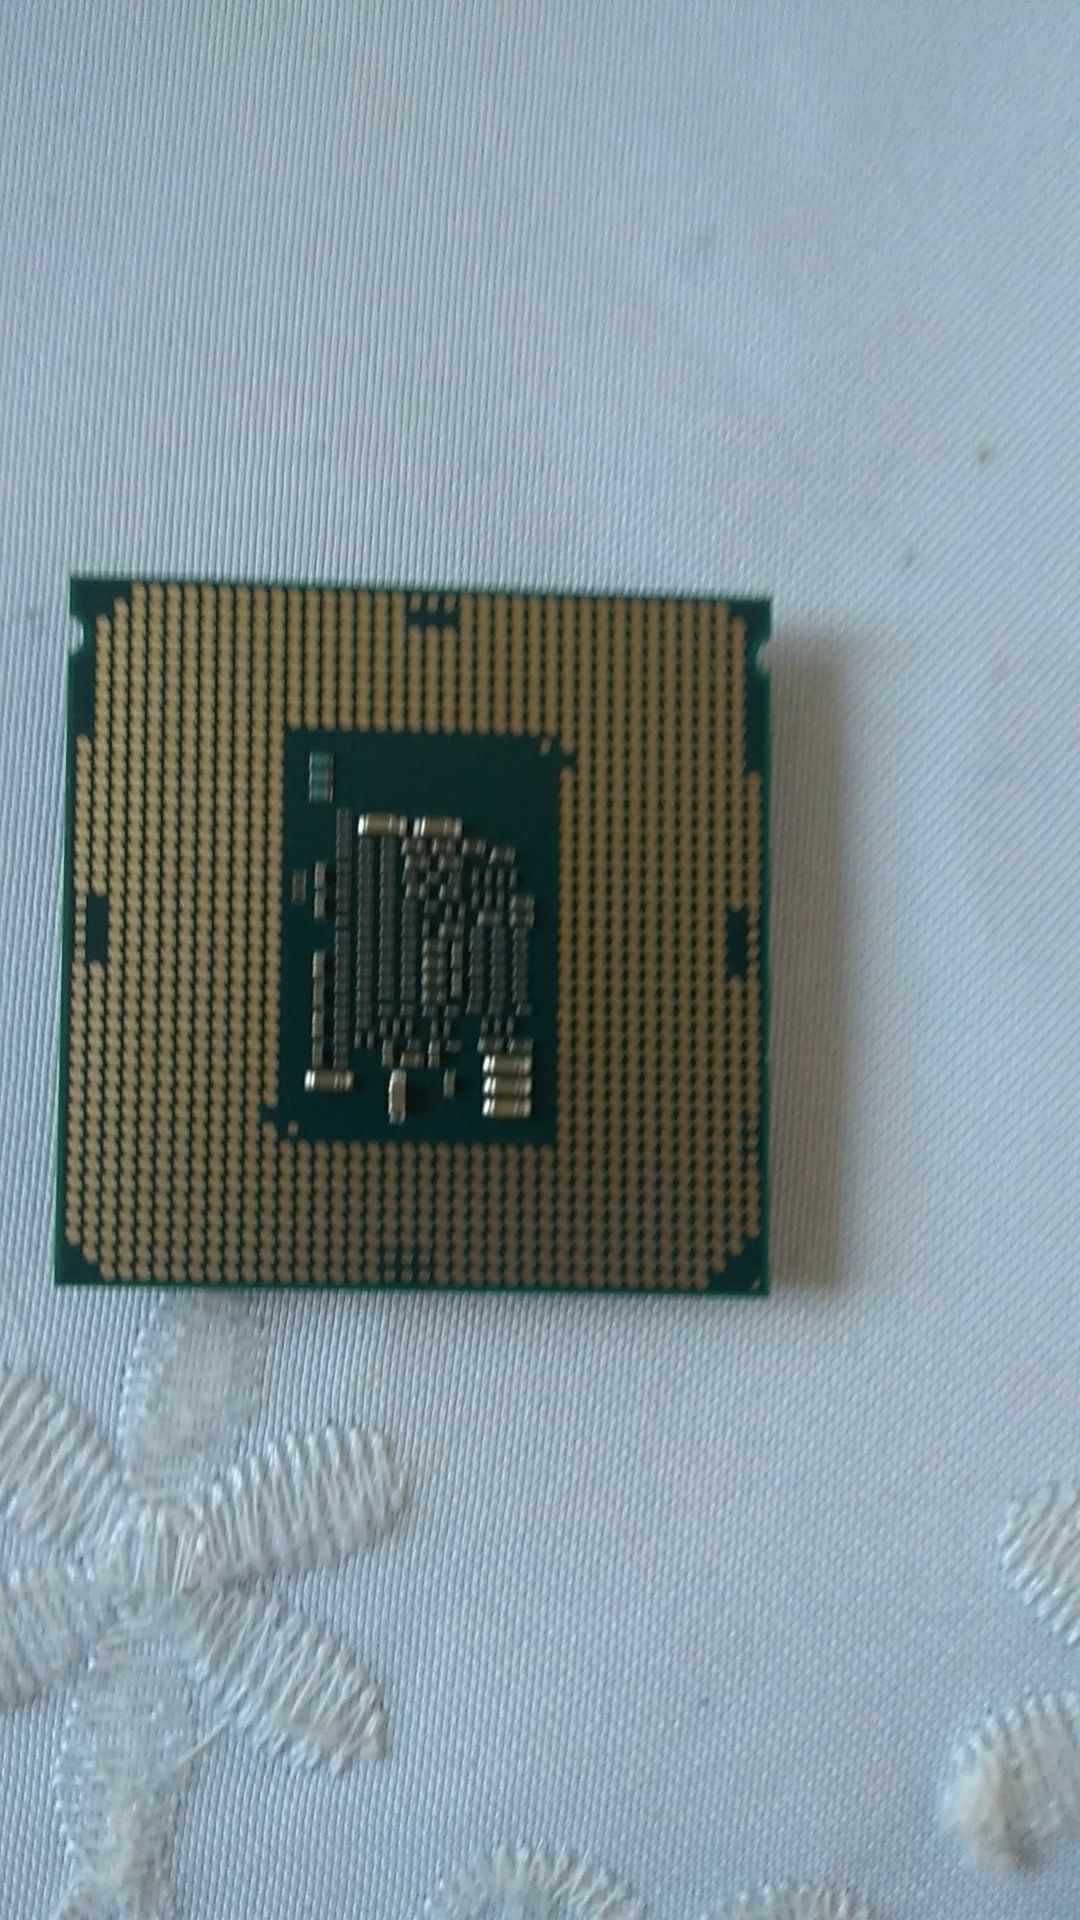 procesor intel core i3-6100 3.70ghz